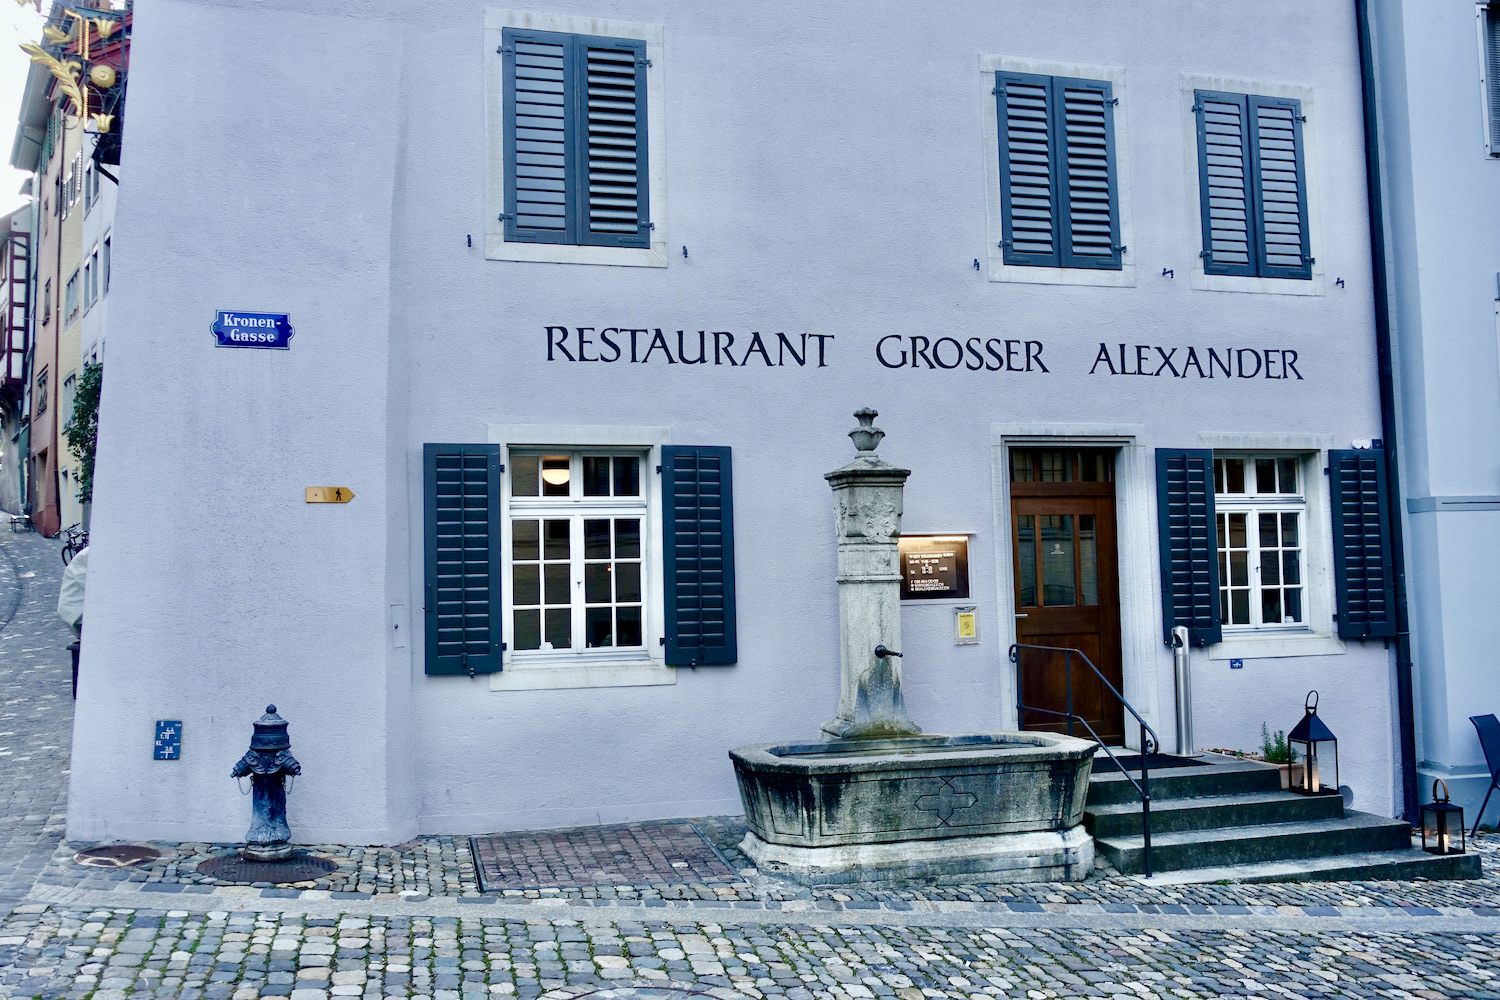 Restaurant Grosser Alexander Baden, Switzerland